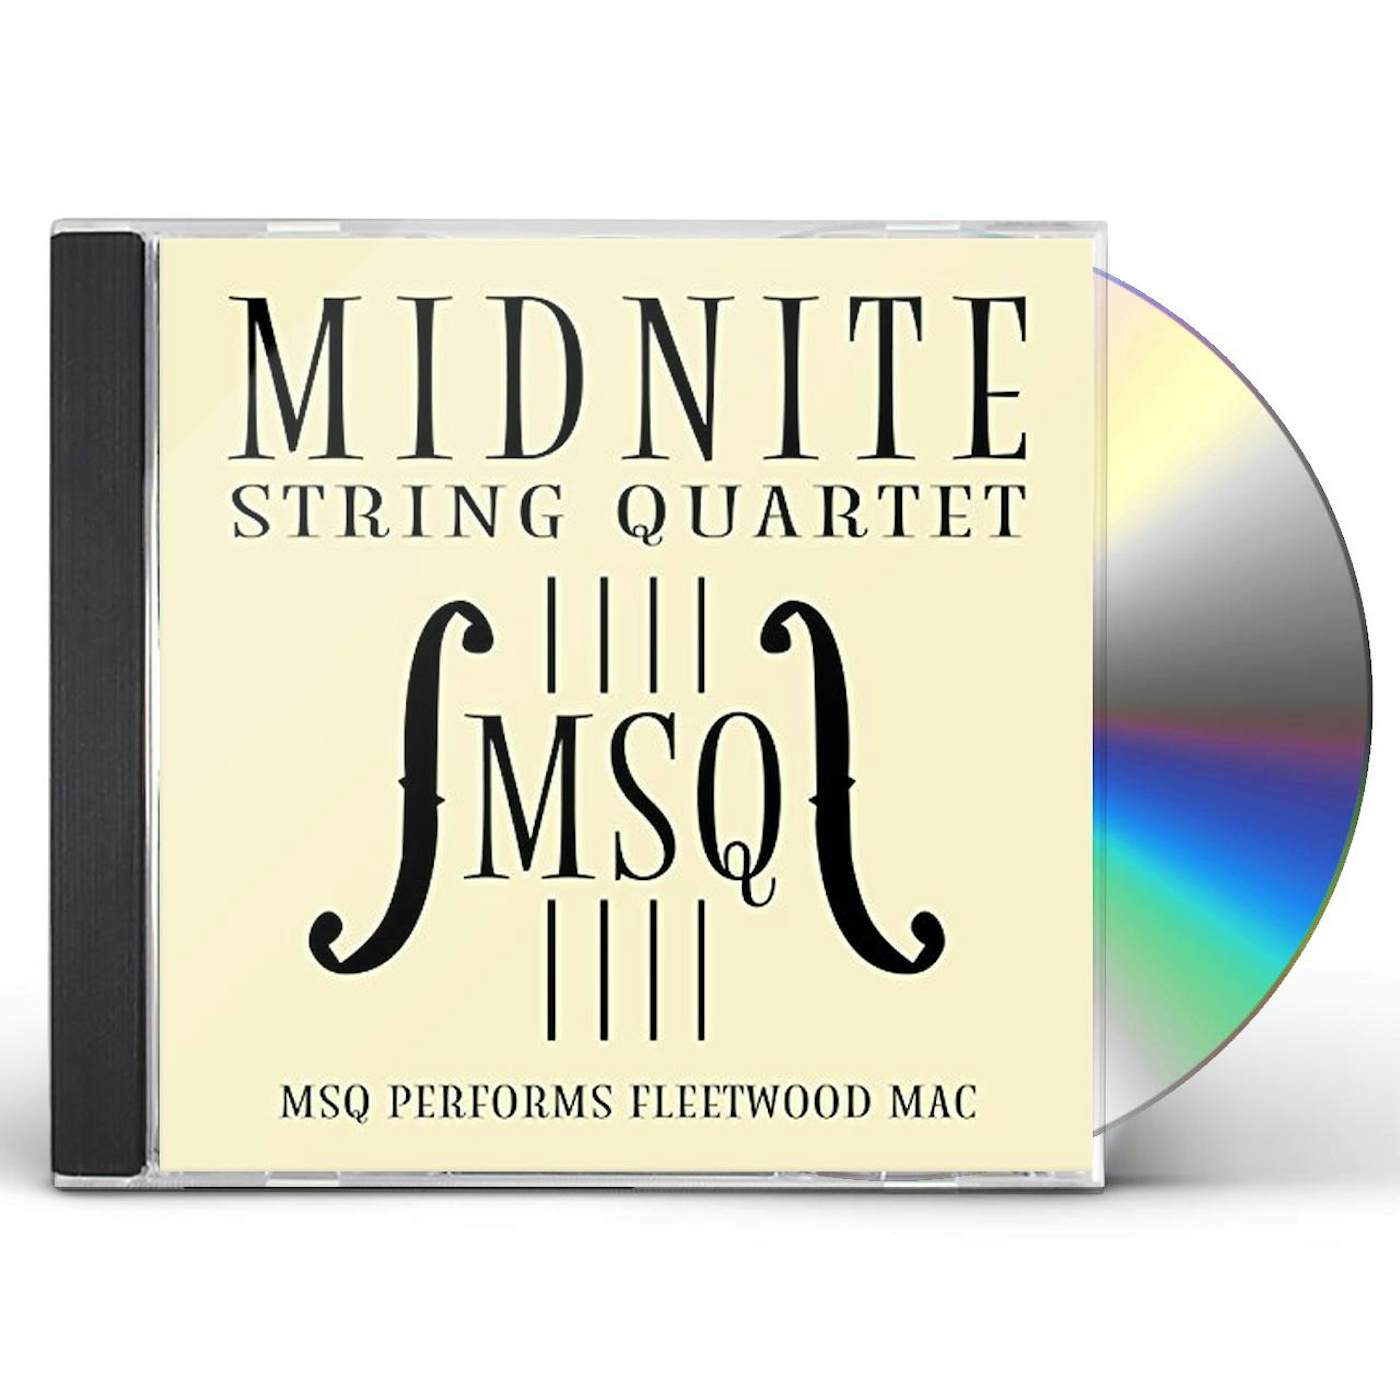 Midnite String Quartet PERFORMS FLEETWOOD MAC (MOD) CD